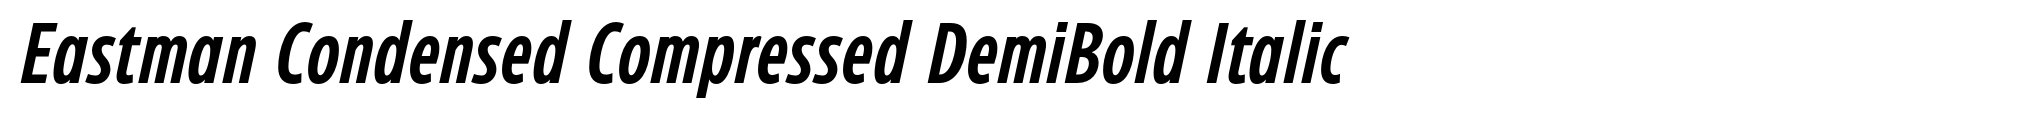 Eastman Condensed Compressed DemiBold Italic image